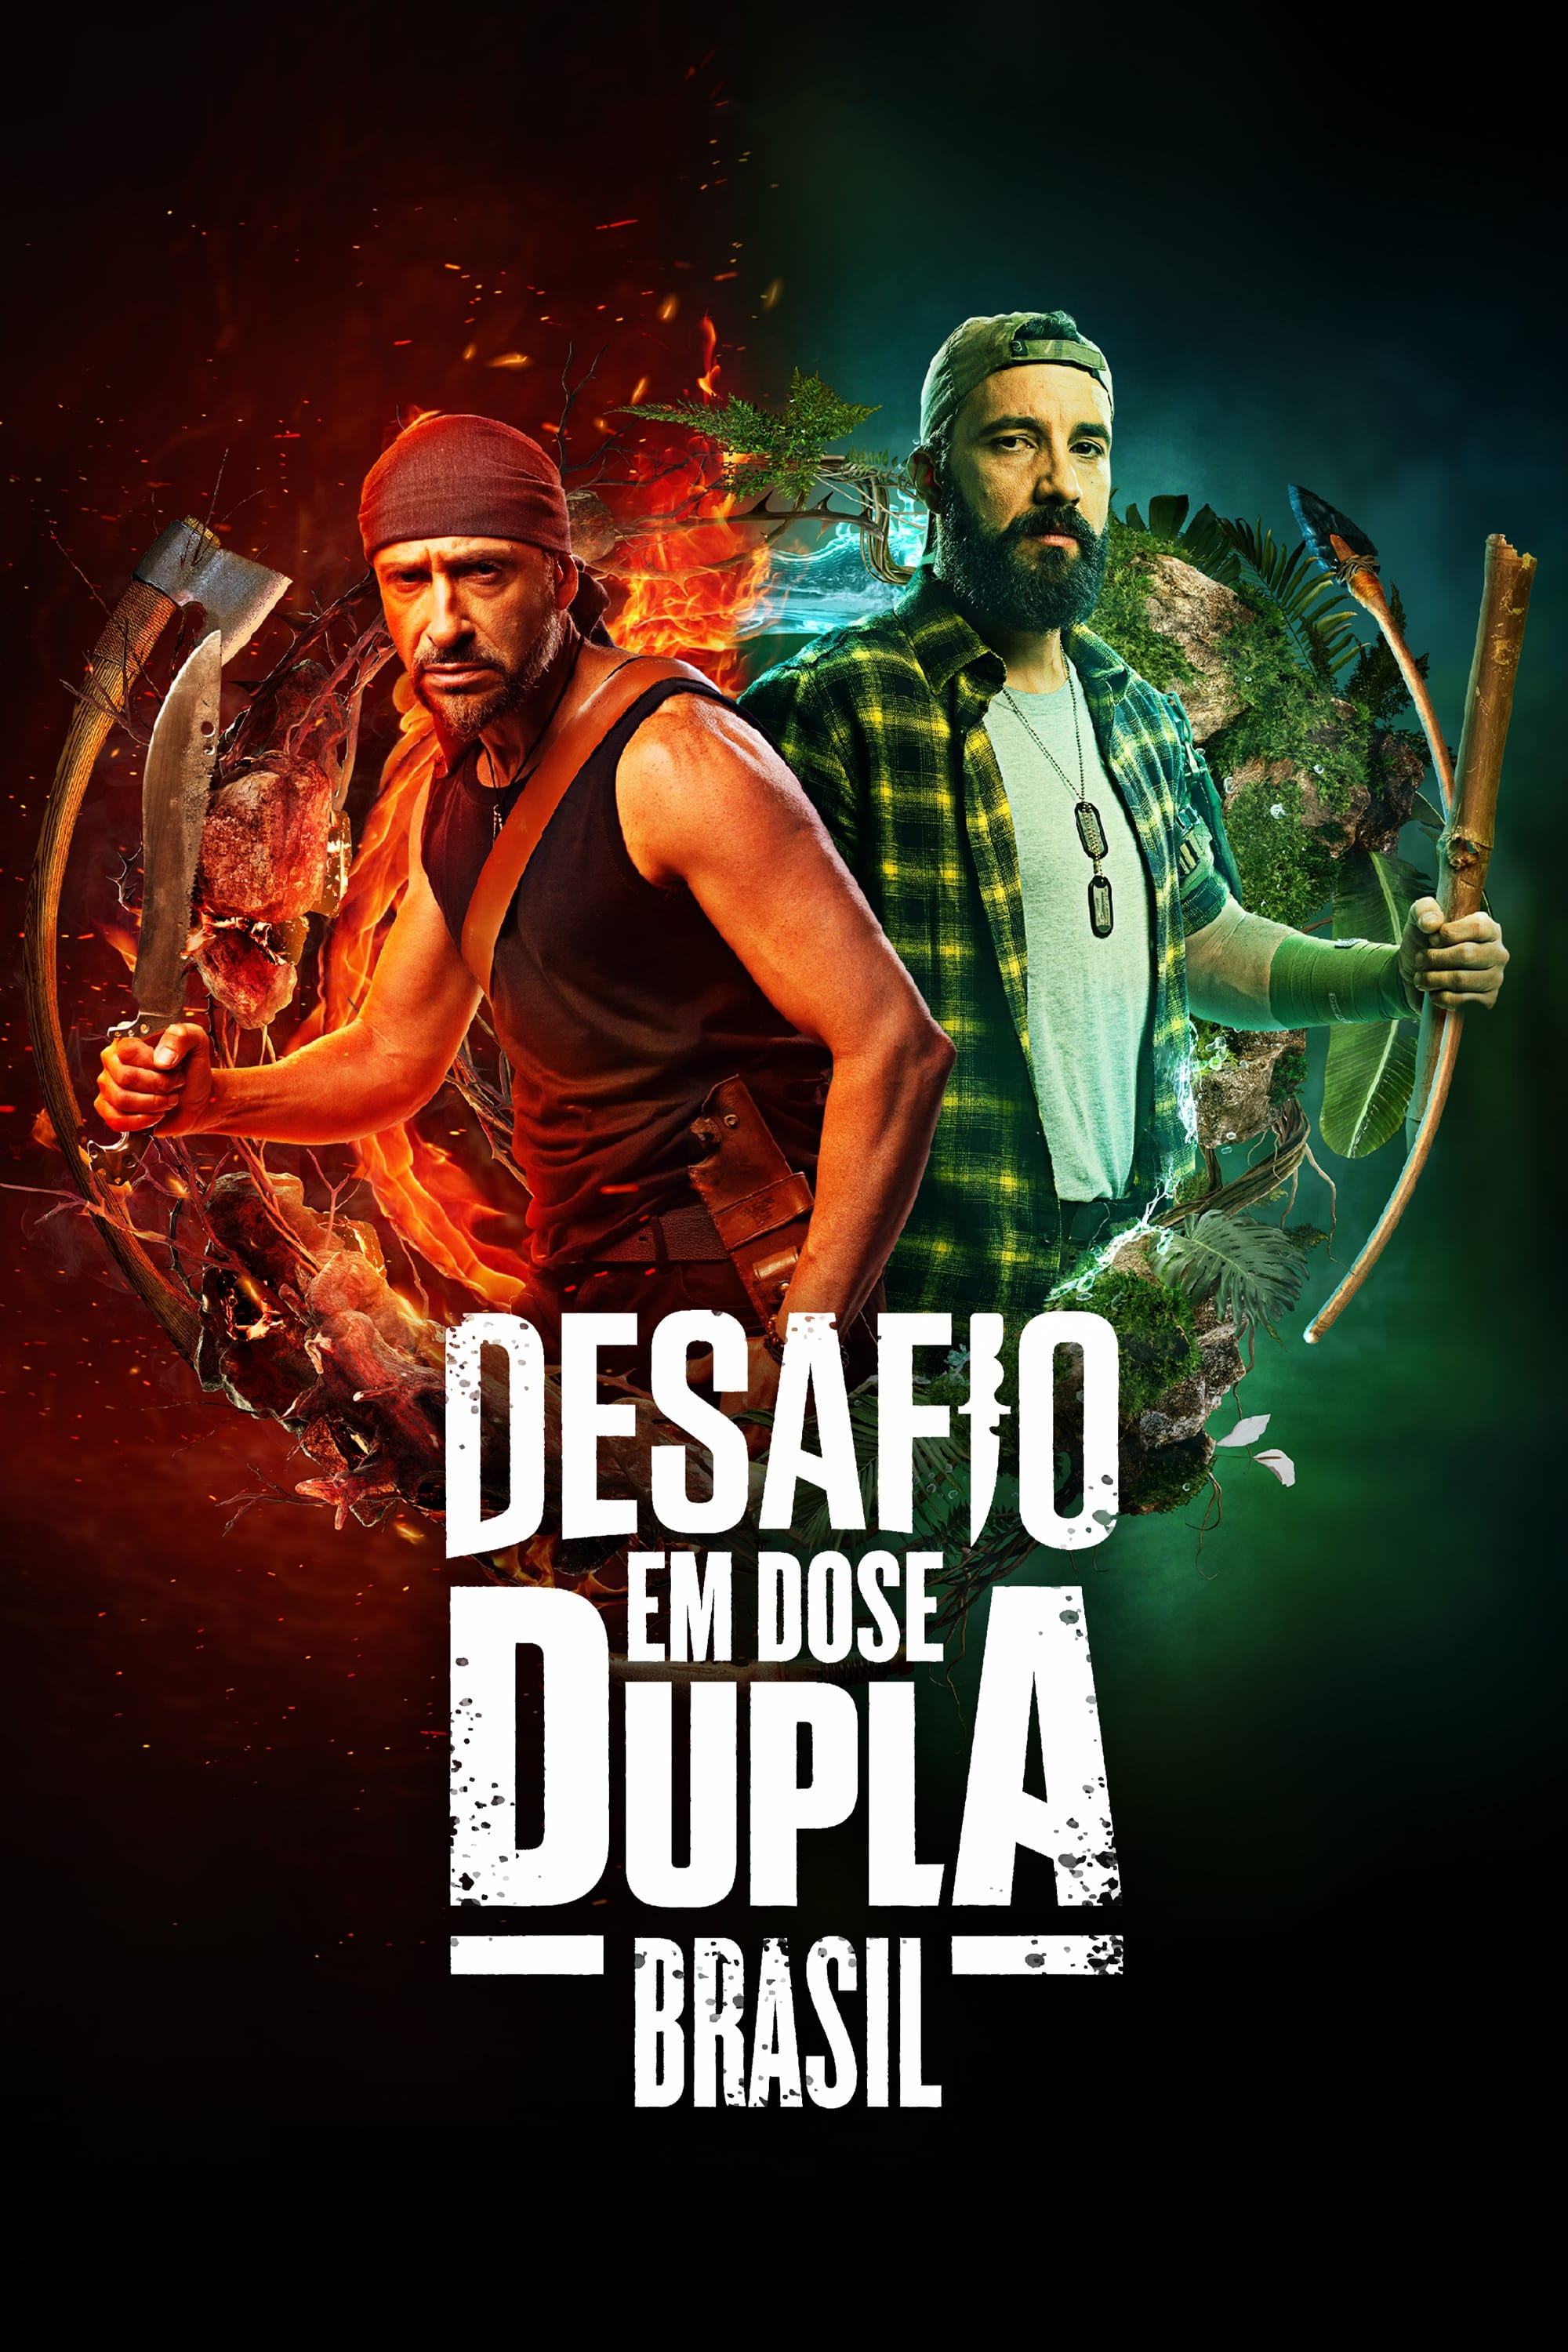 TV ratings for Dual Survival Brazil (Desafio Em Dose Dupla Brasil) in Sweden. Discovery+ TV series